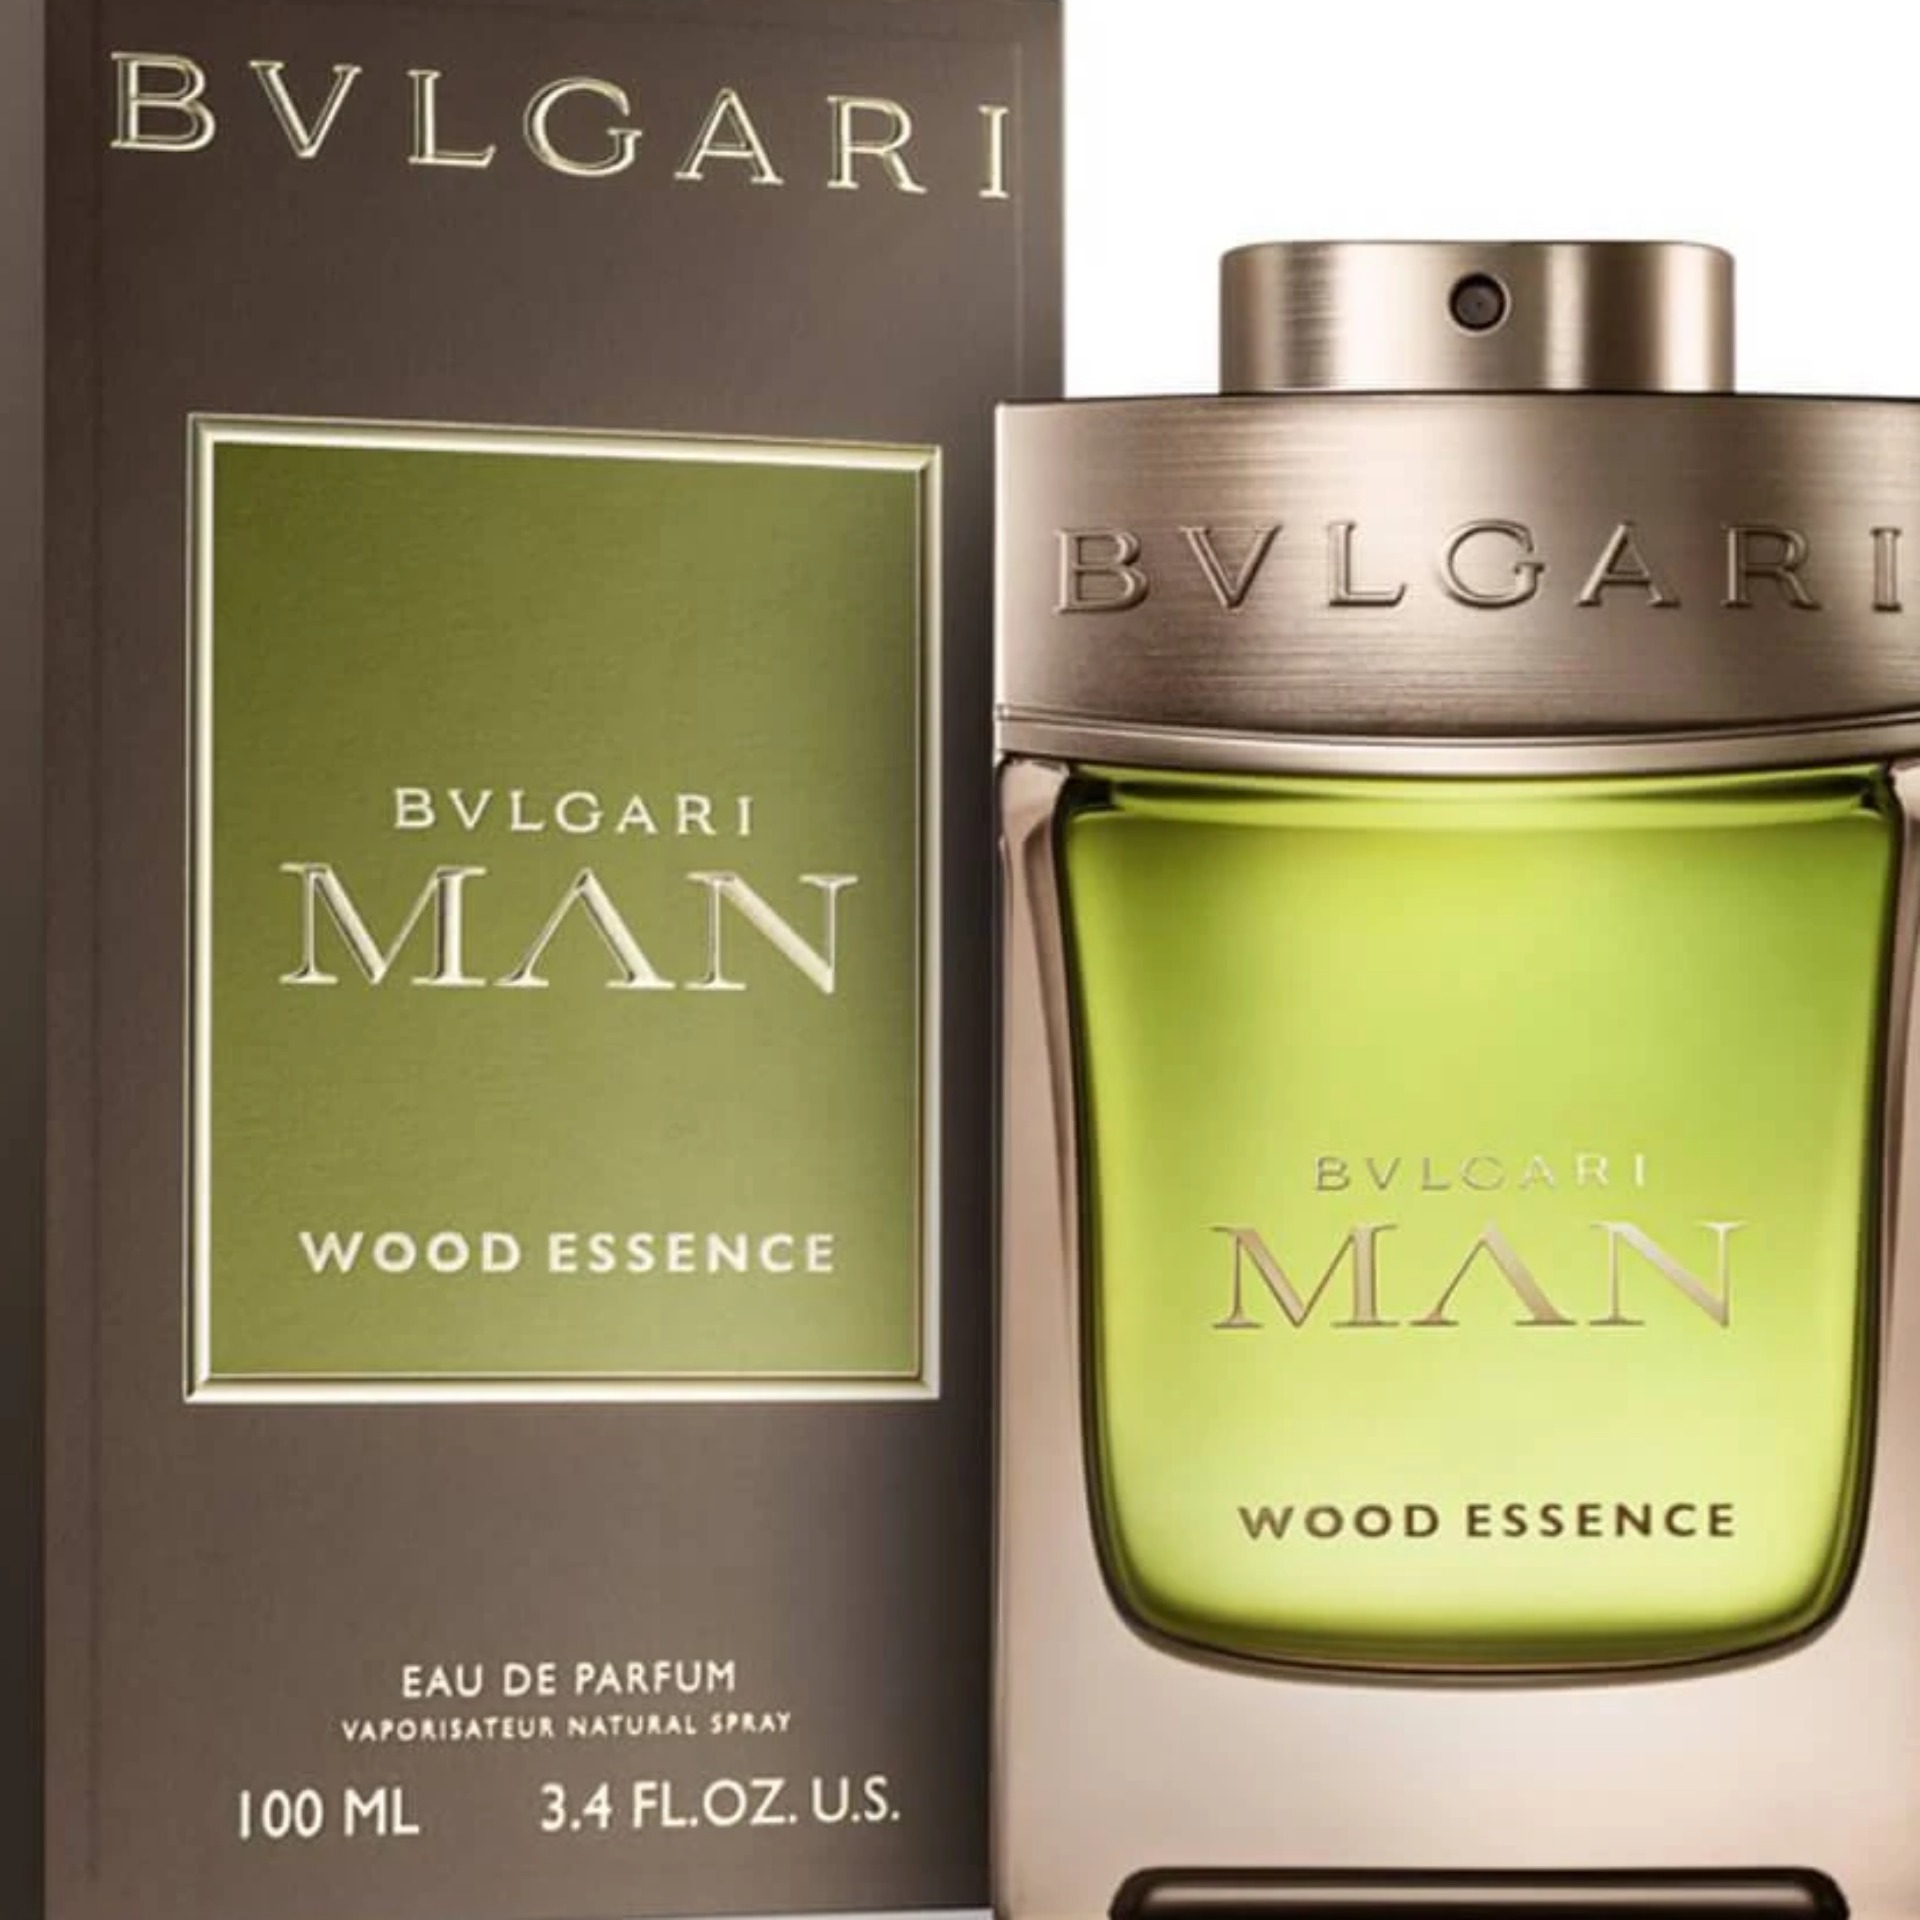 bvlgari wood essence cologne